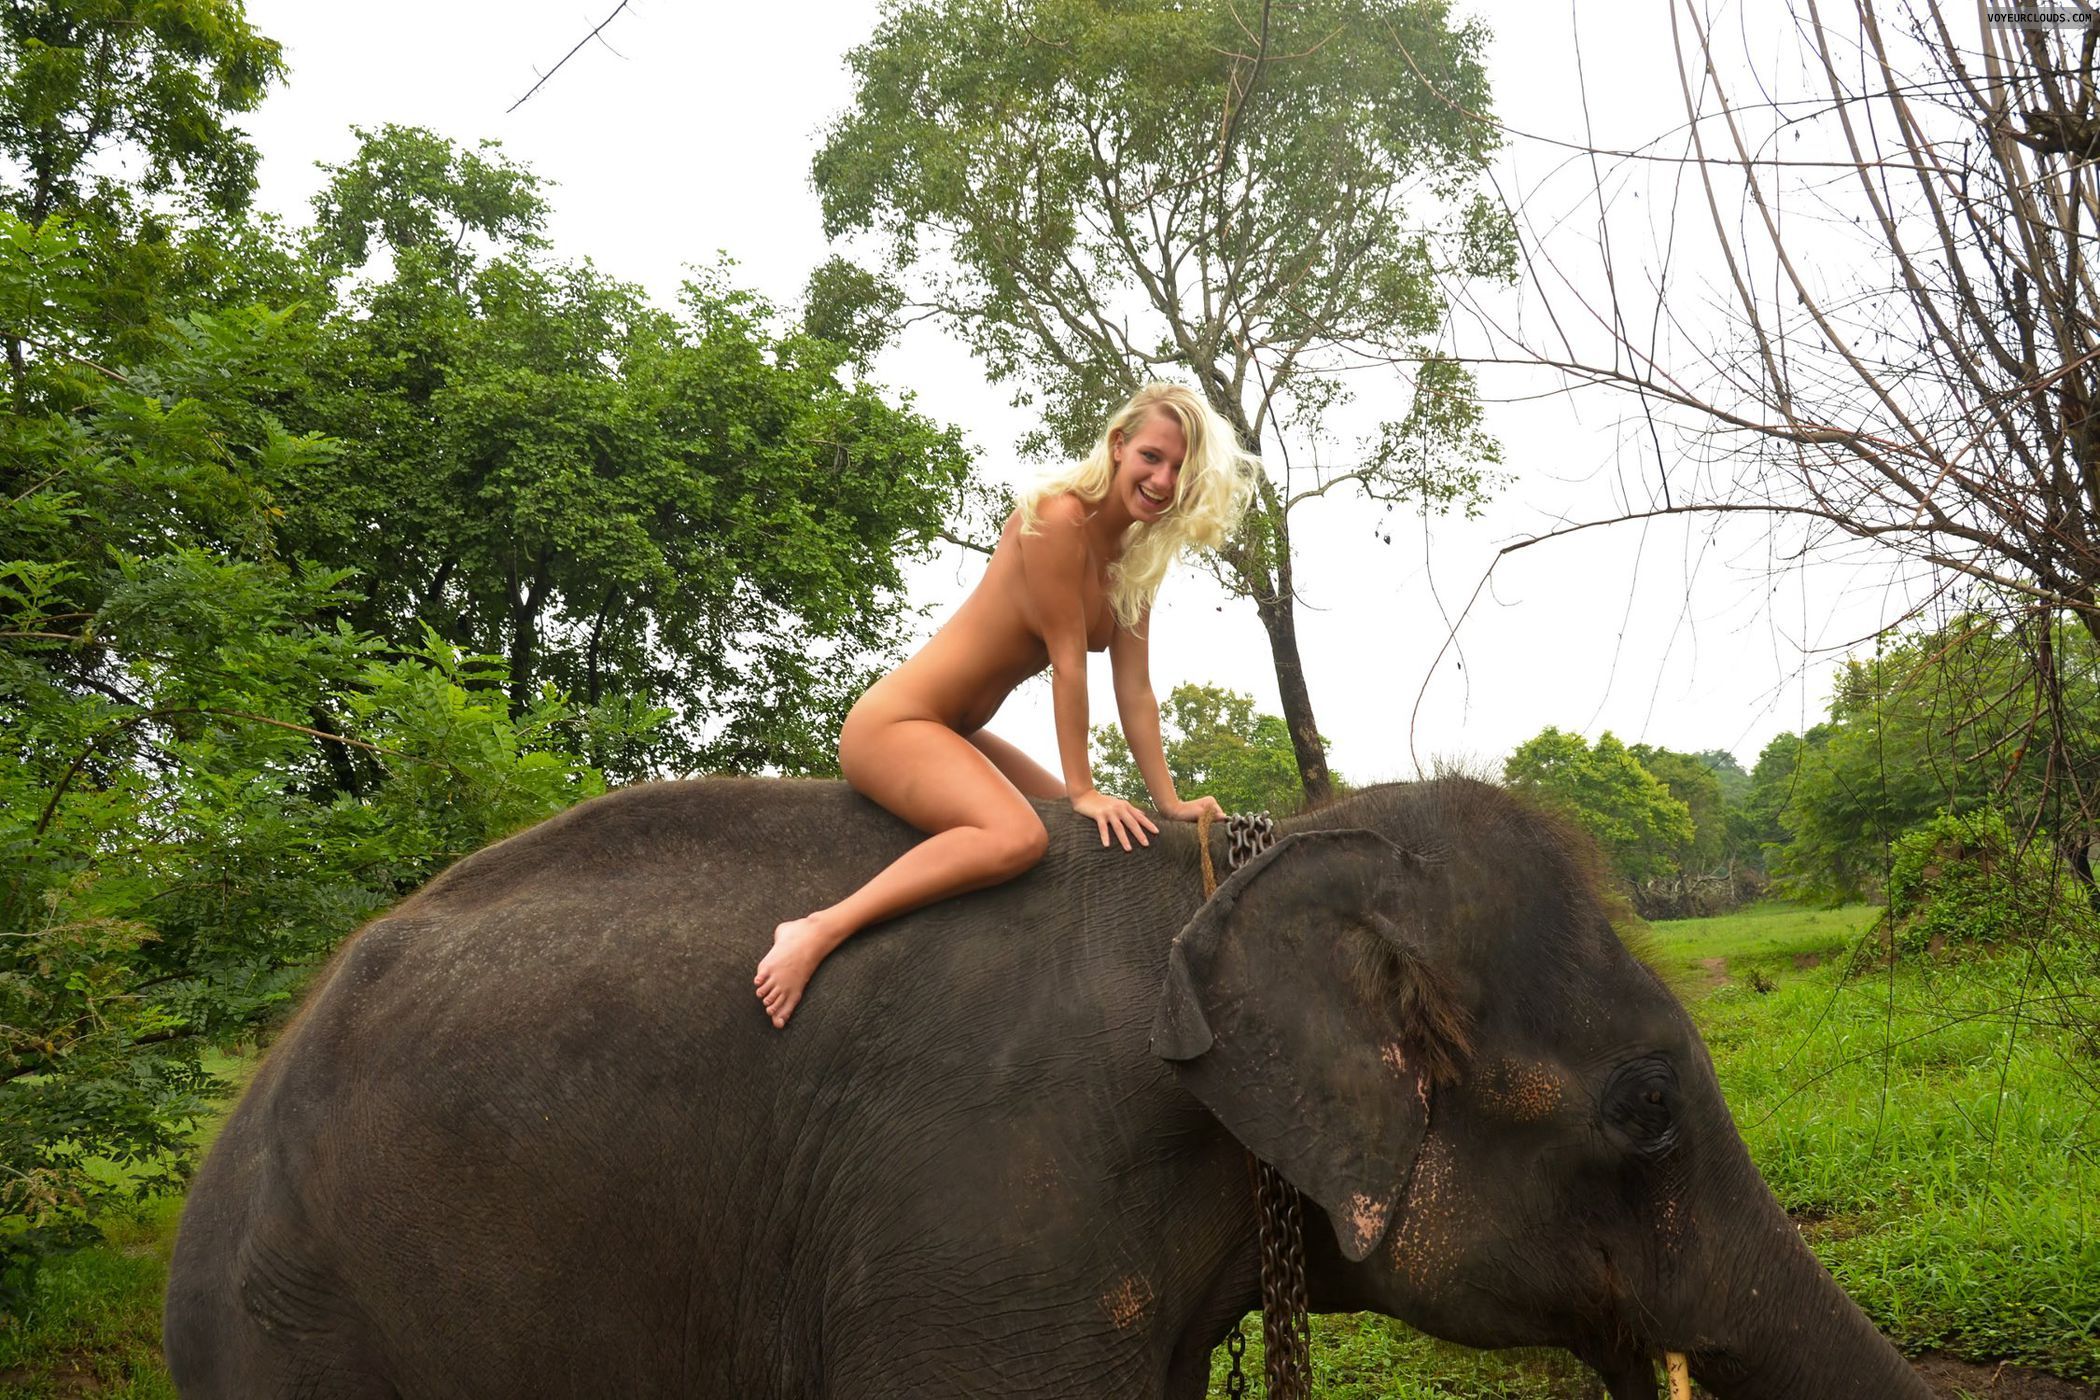 Girl and elephants sex